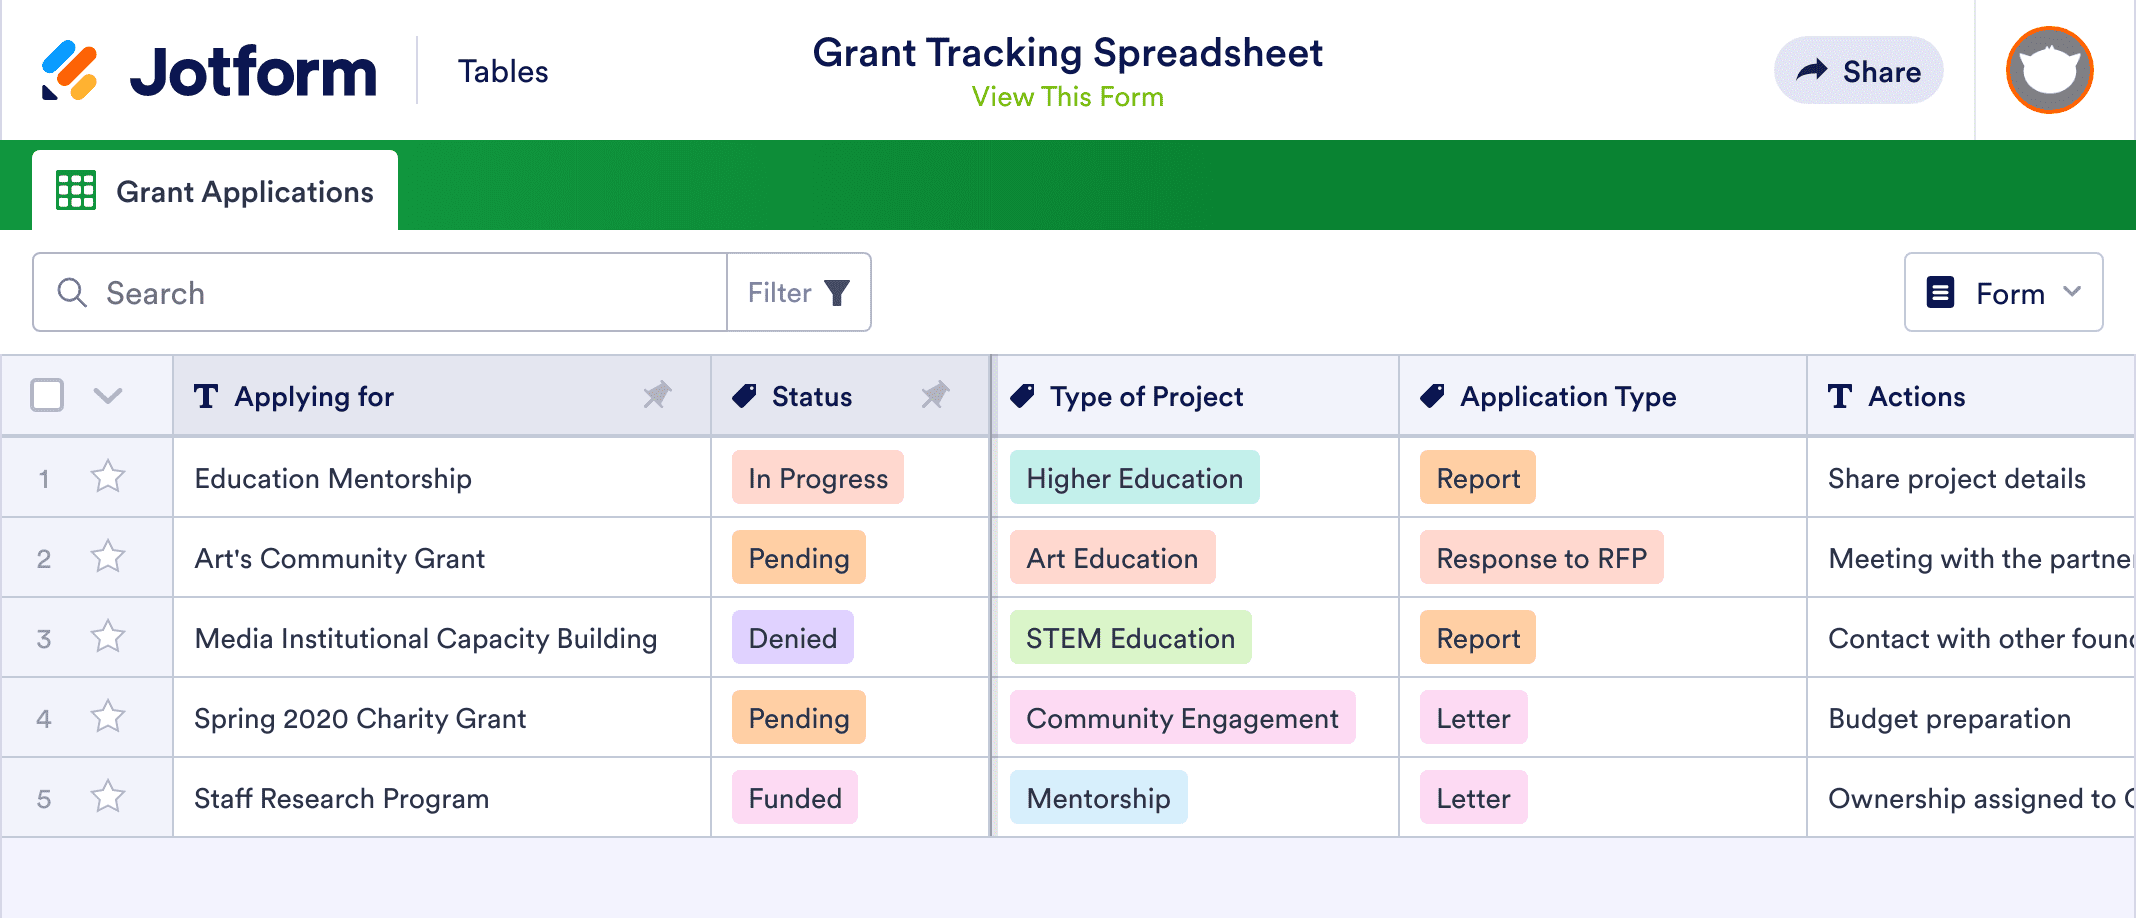 Grant Tracking Spreadsheet